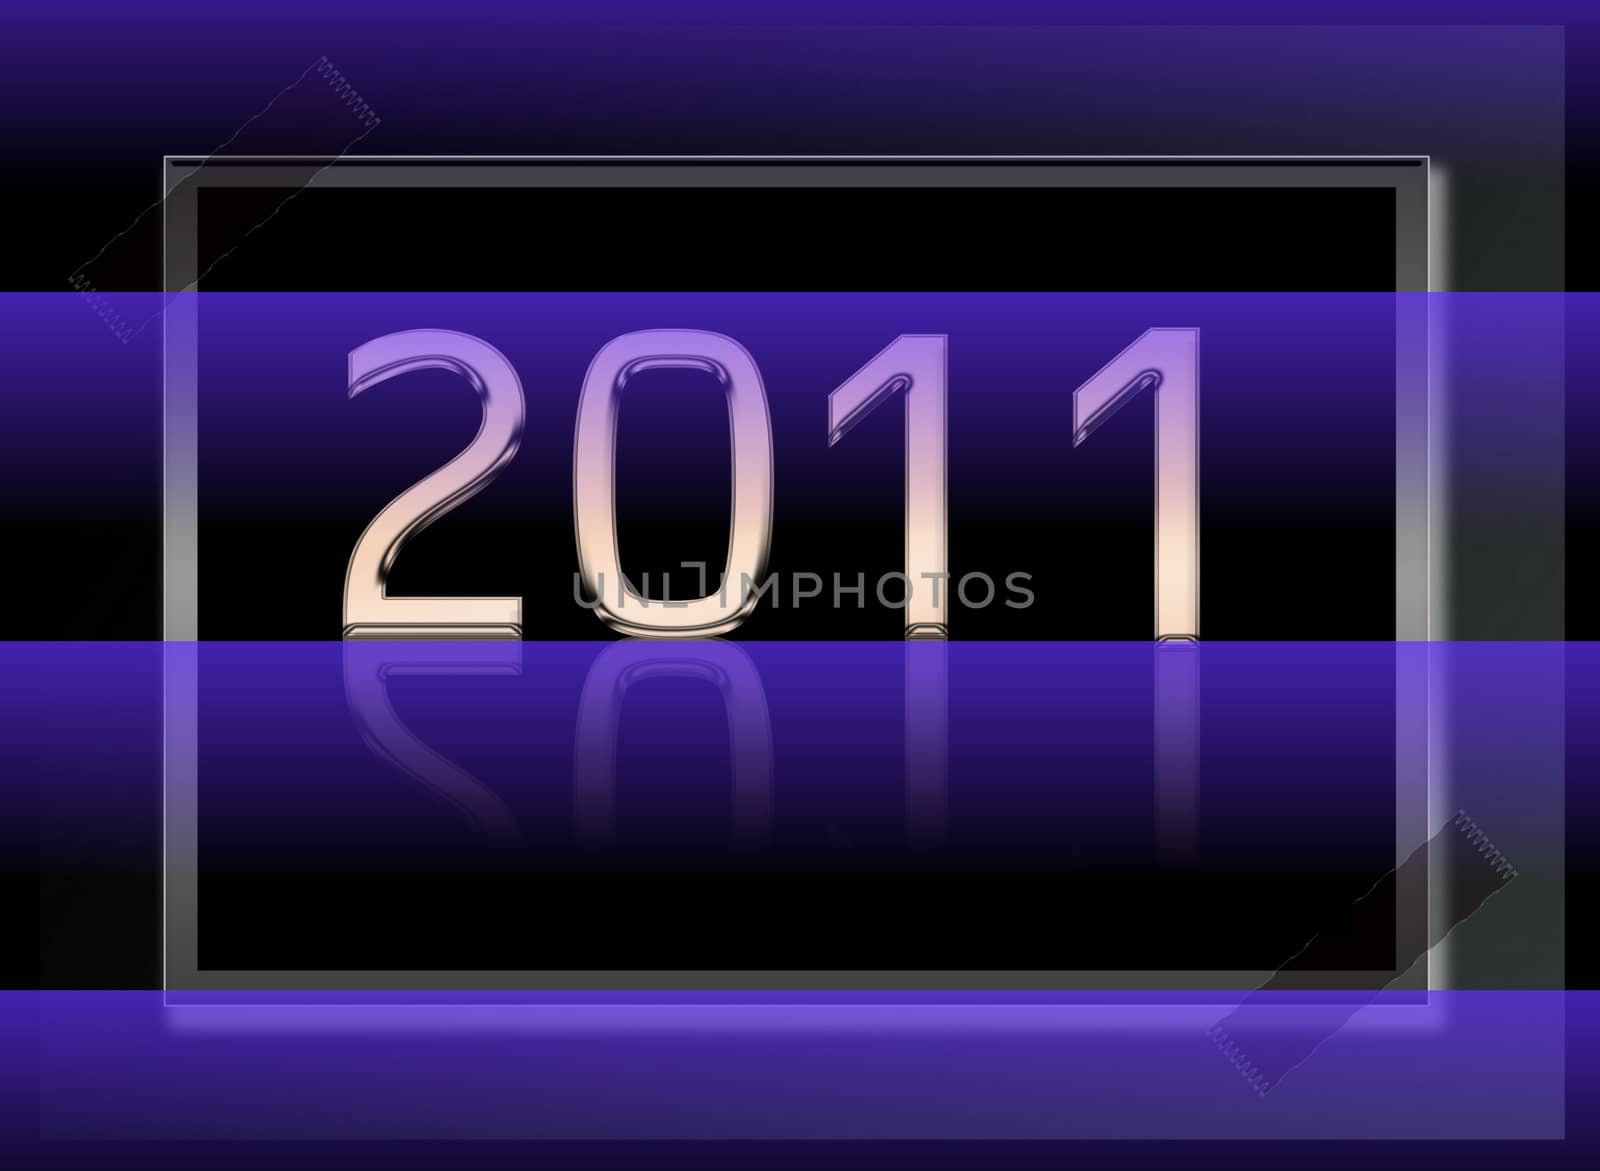 Happy new year 2011 by Baltus